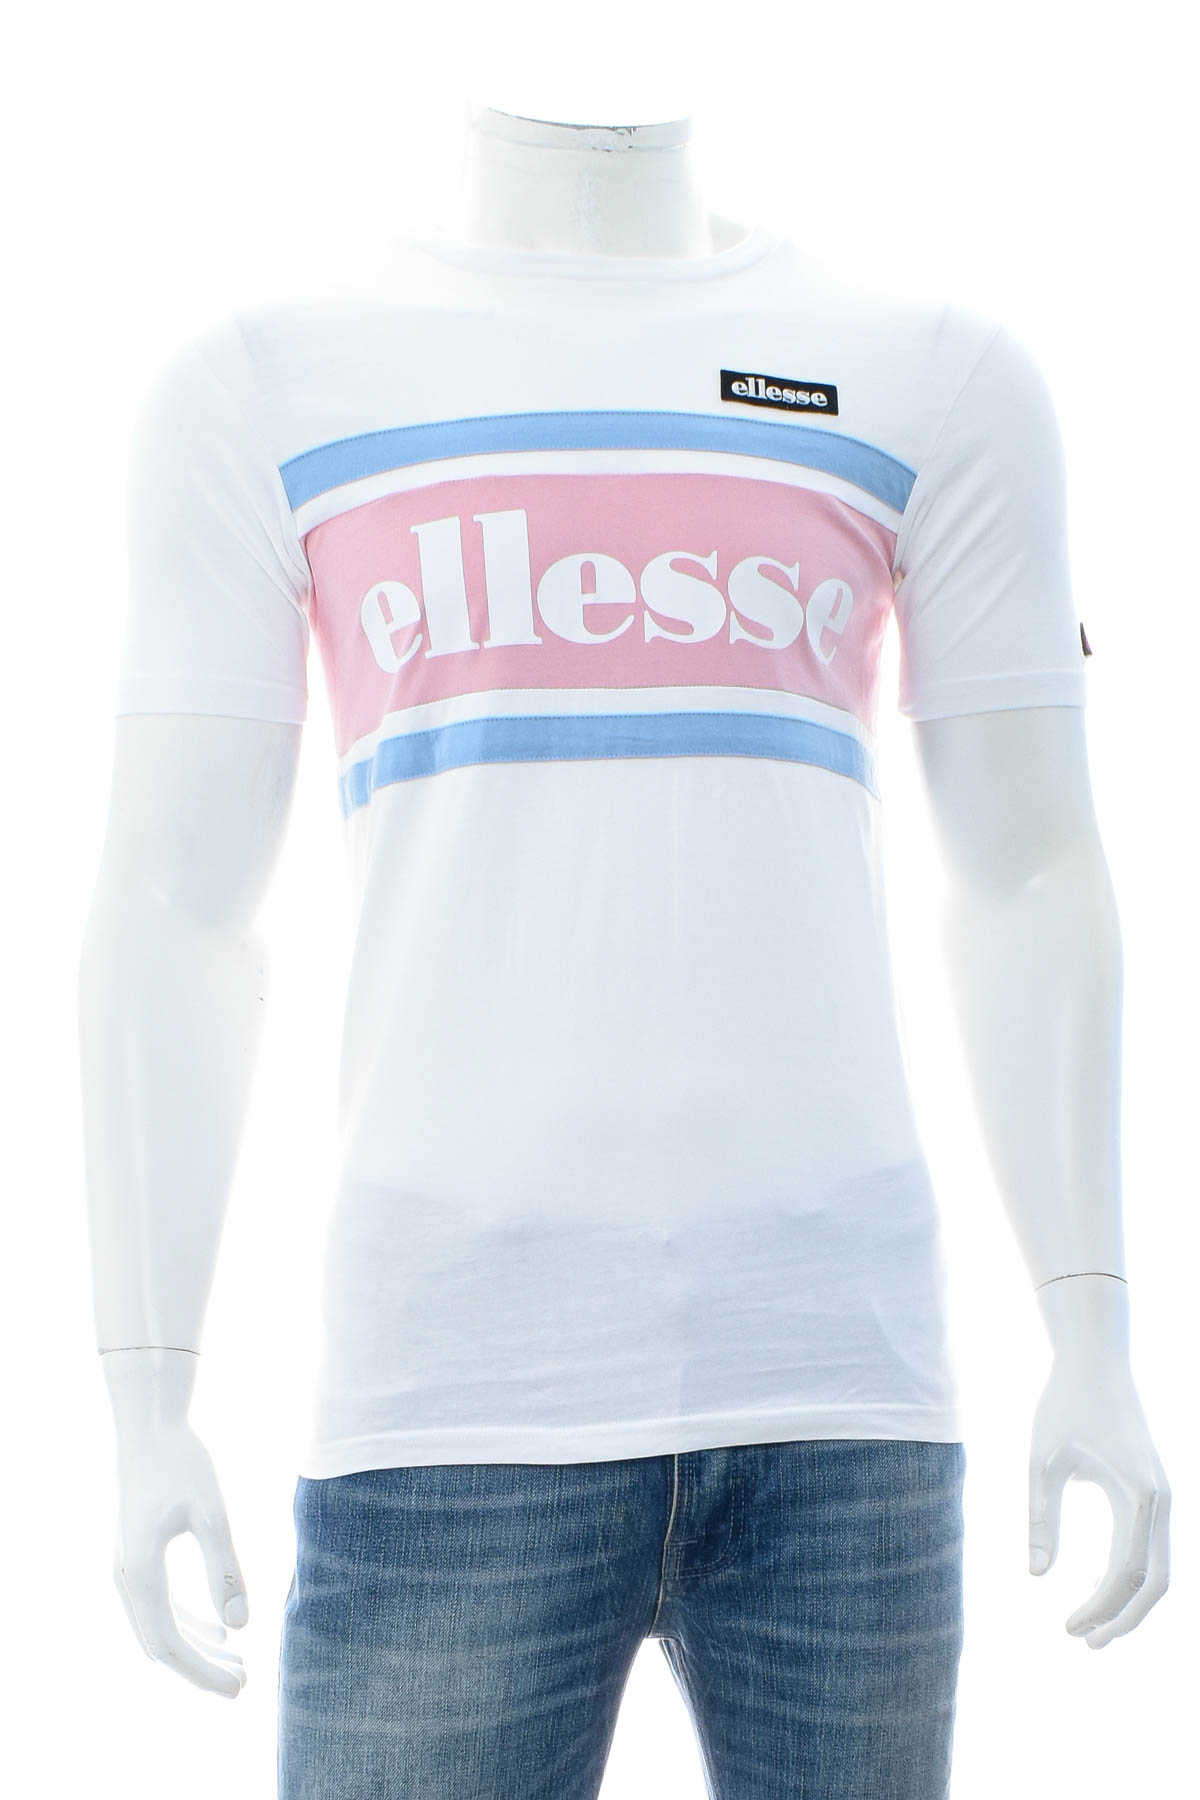 Men's T-shirt - Ellesse - 0